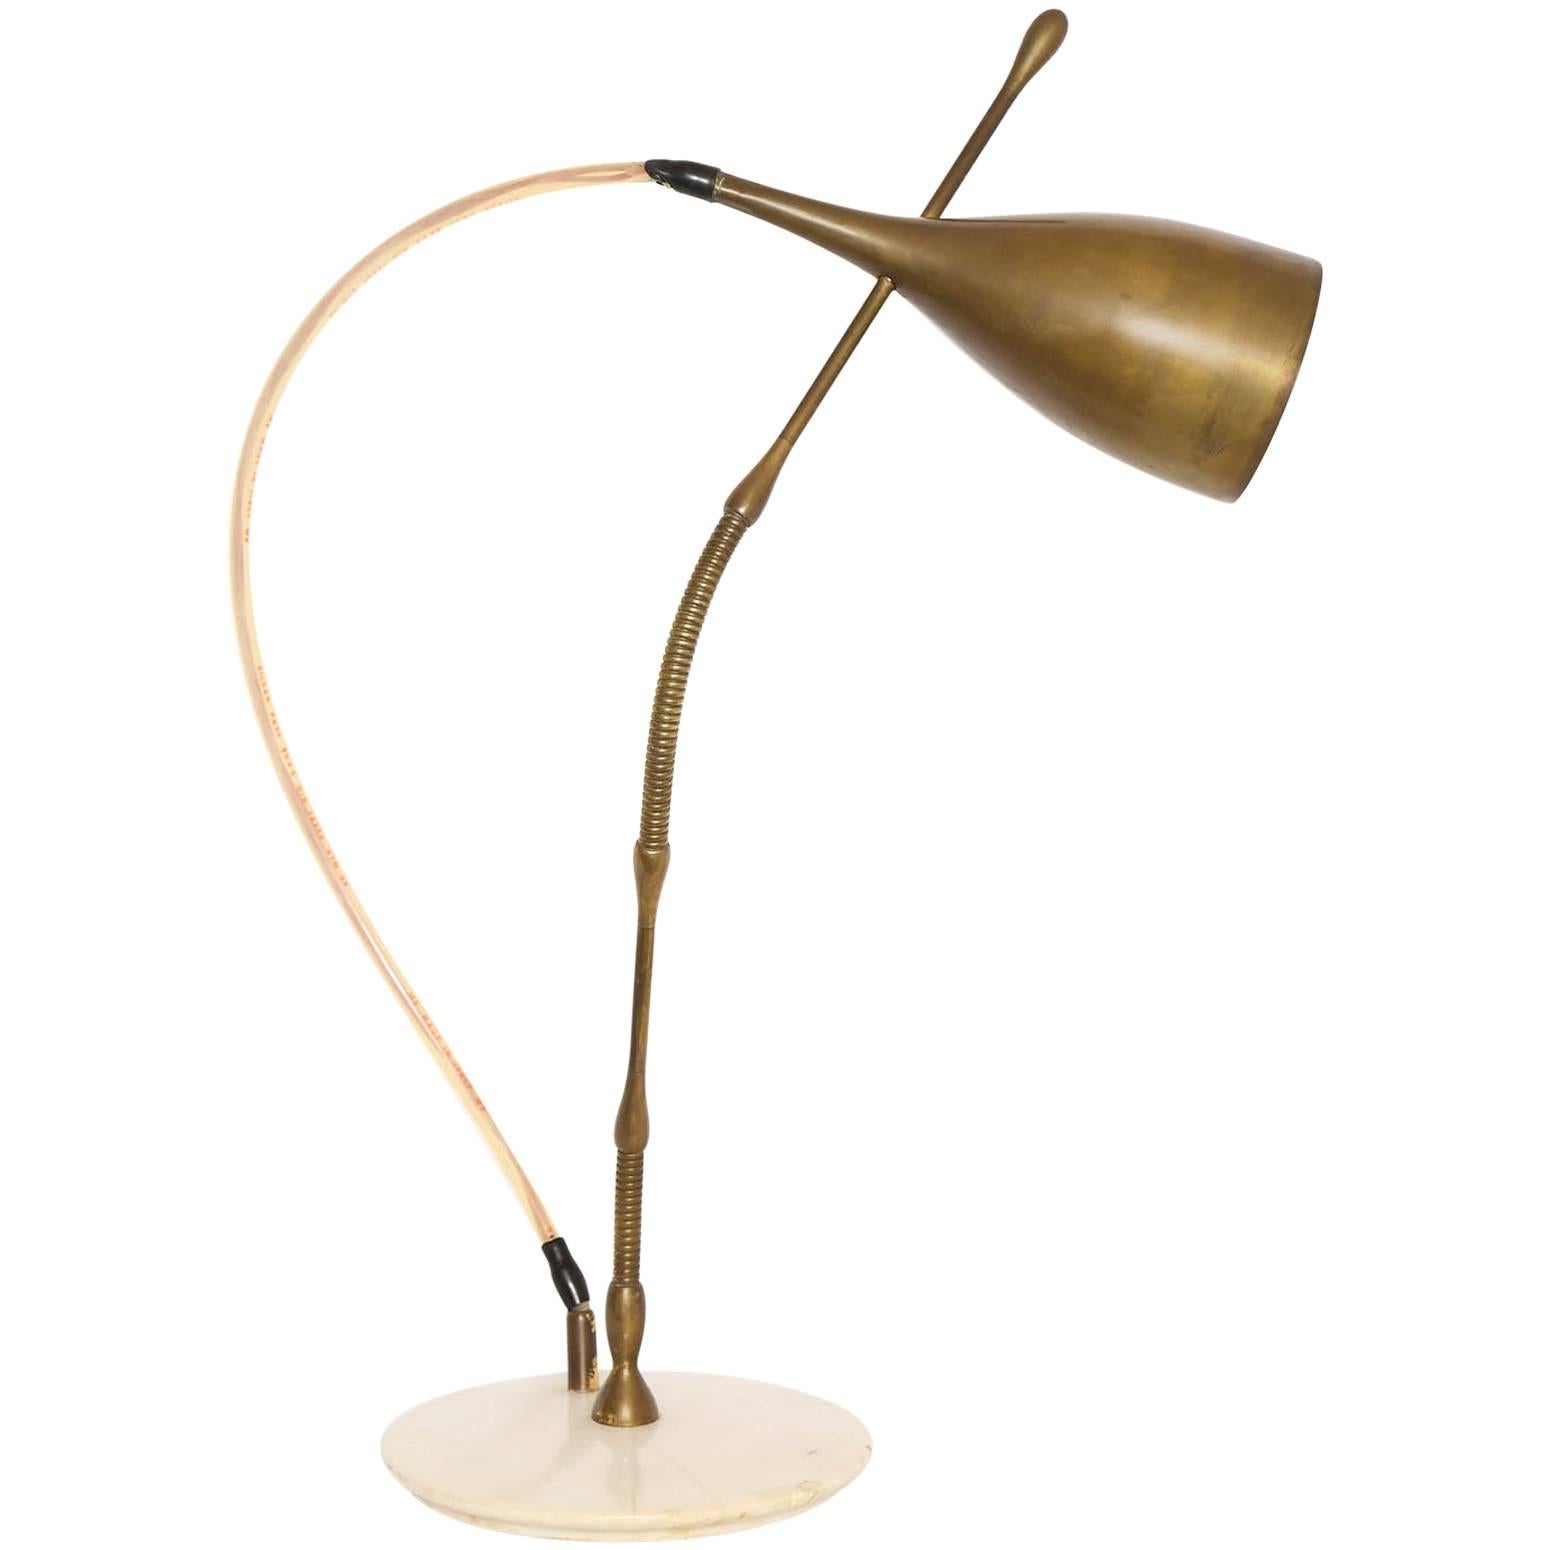 Articulated Table Lamp, Italian, 1950s Unique Rare Design